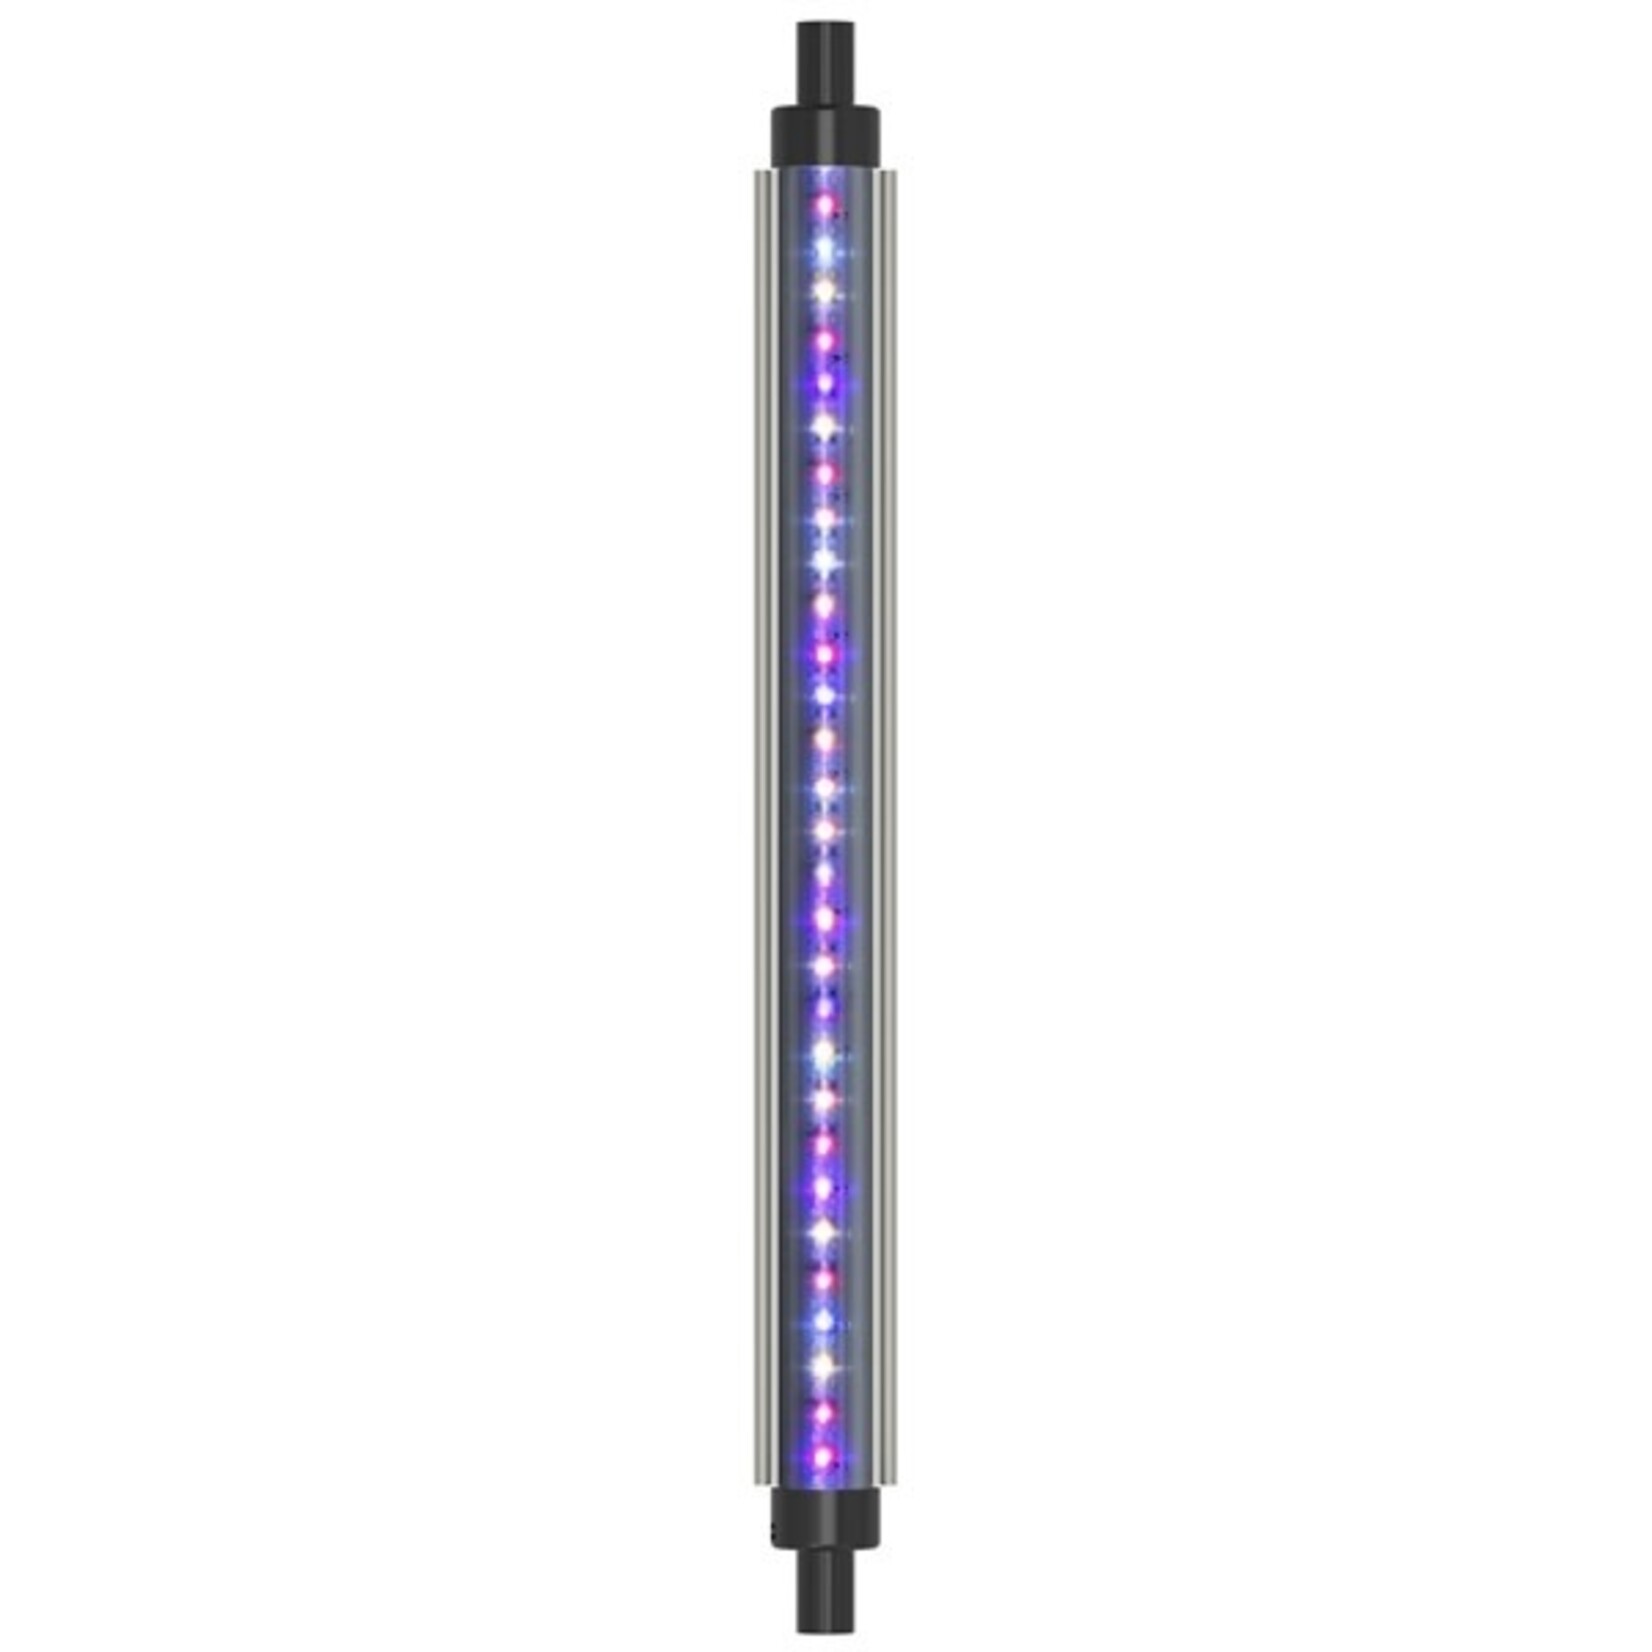 Aquatlantis Easy LED tube 590 mm 12v-1.5a